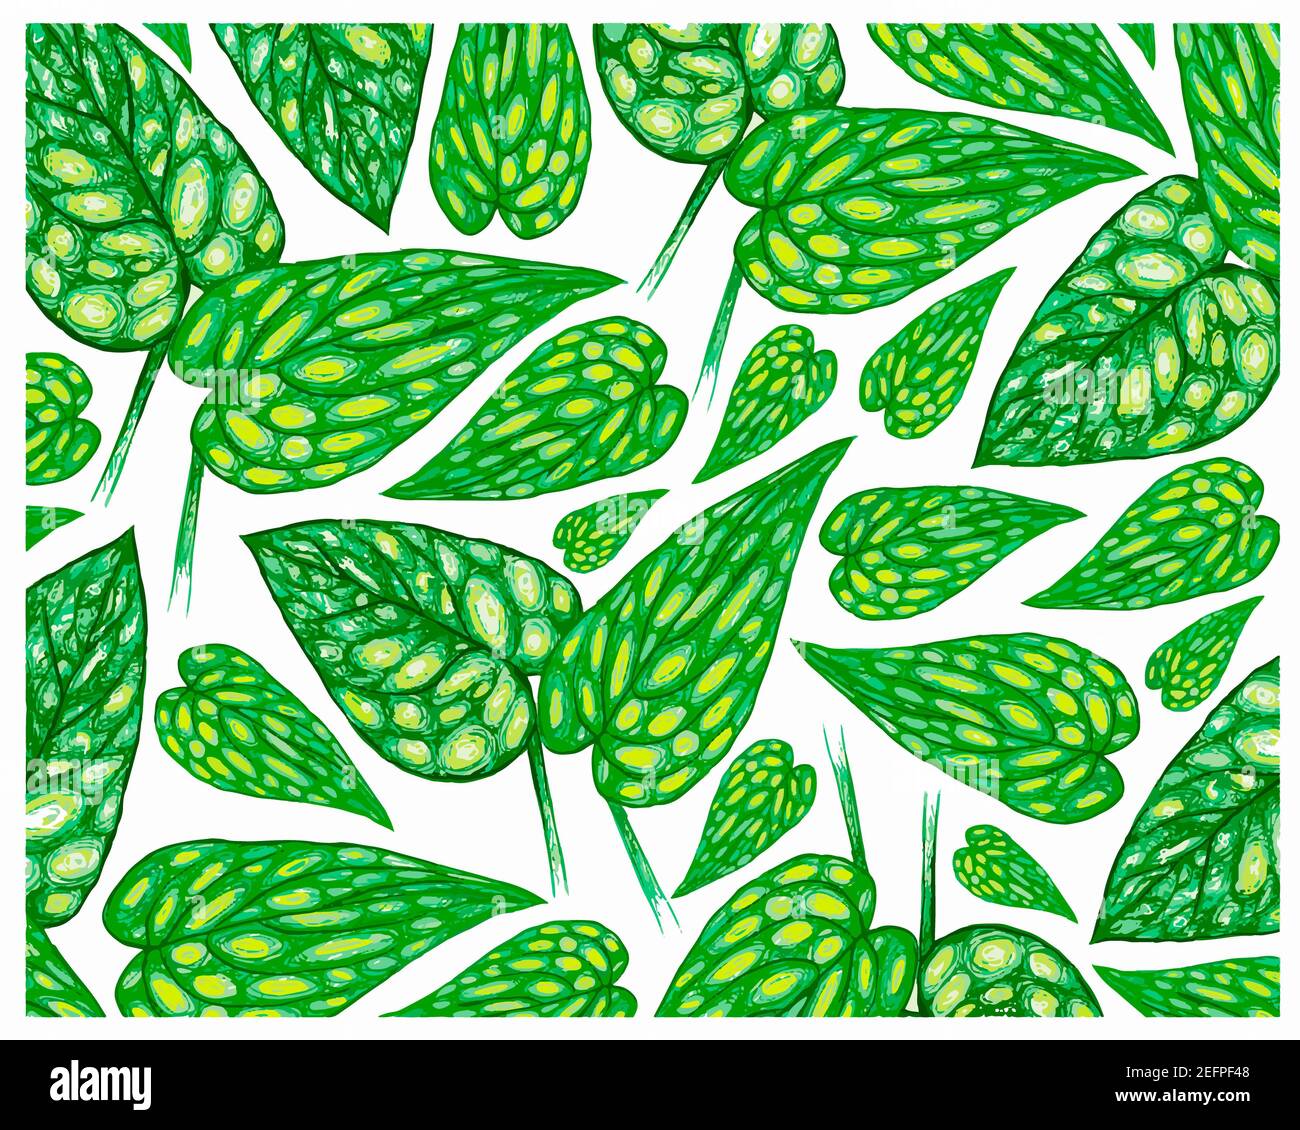 Ecology Concepts, Illustration Background of Monstera Peru or Karstenianum Plants. Stock Photo